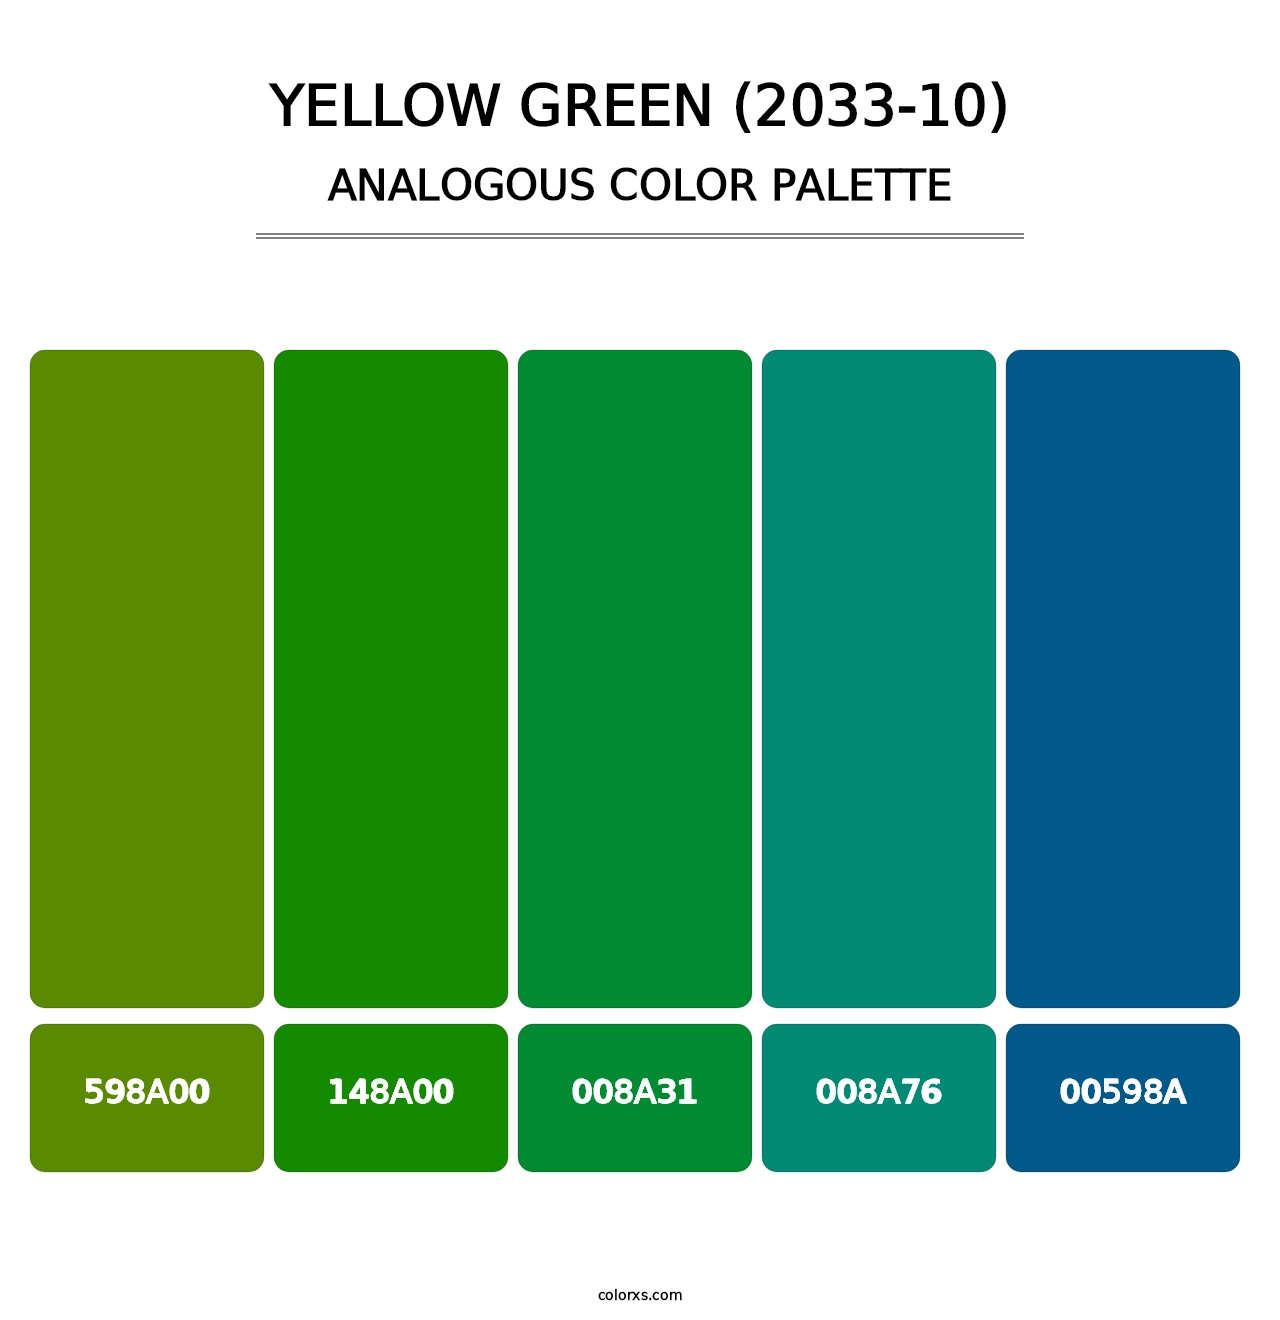 Yellow Green (2033-10) - Analogous Color Palette